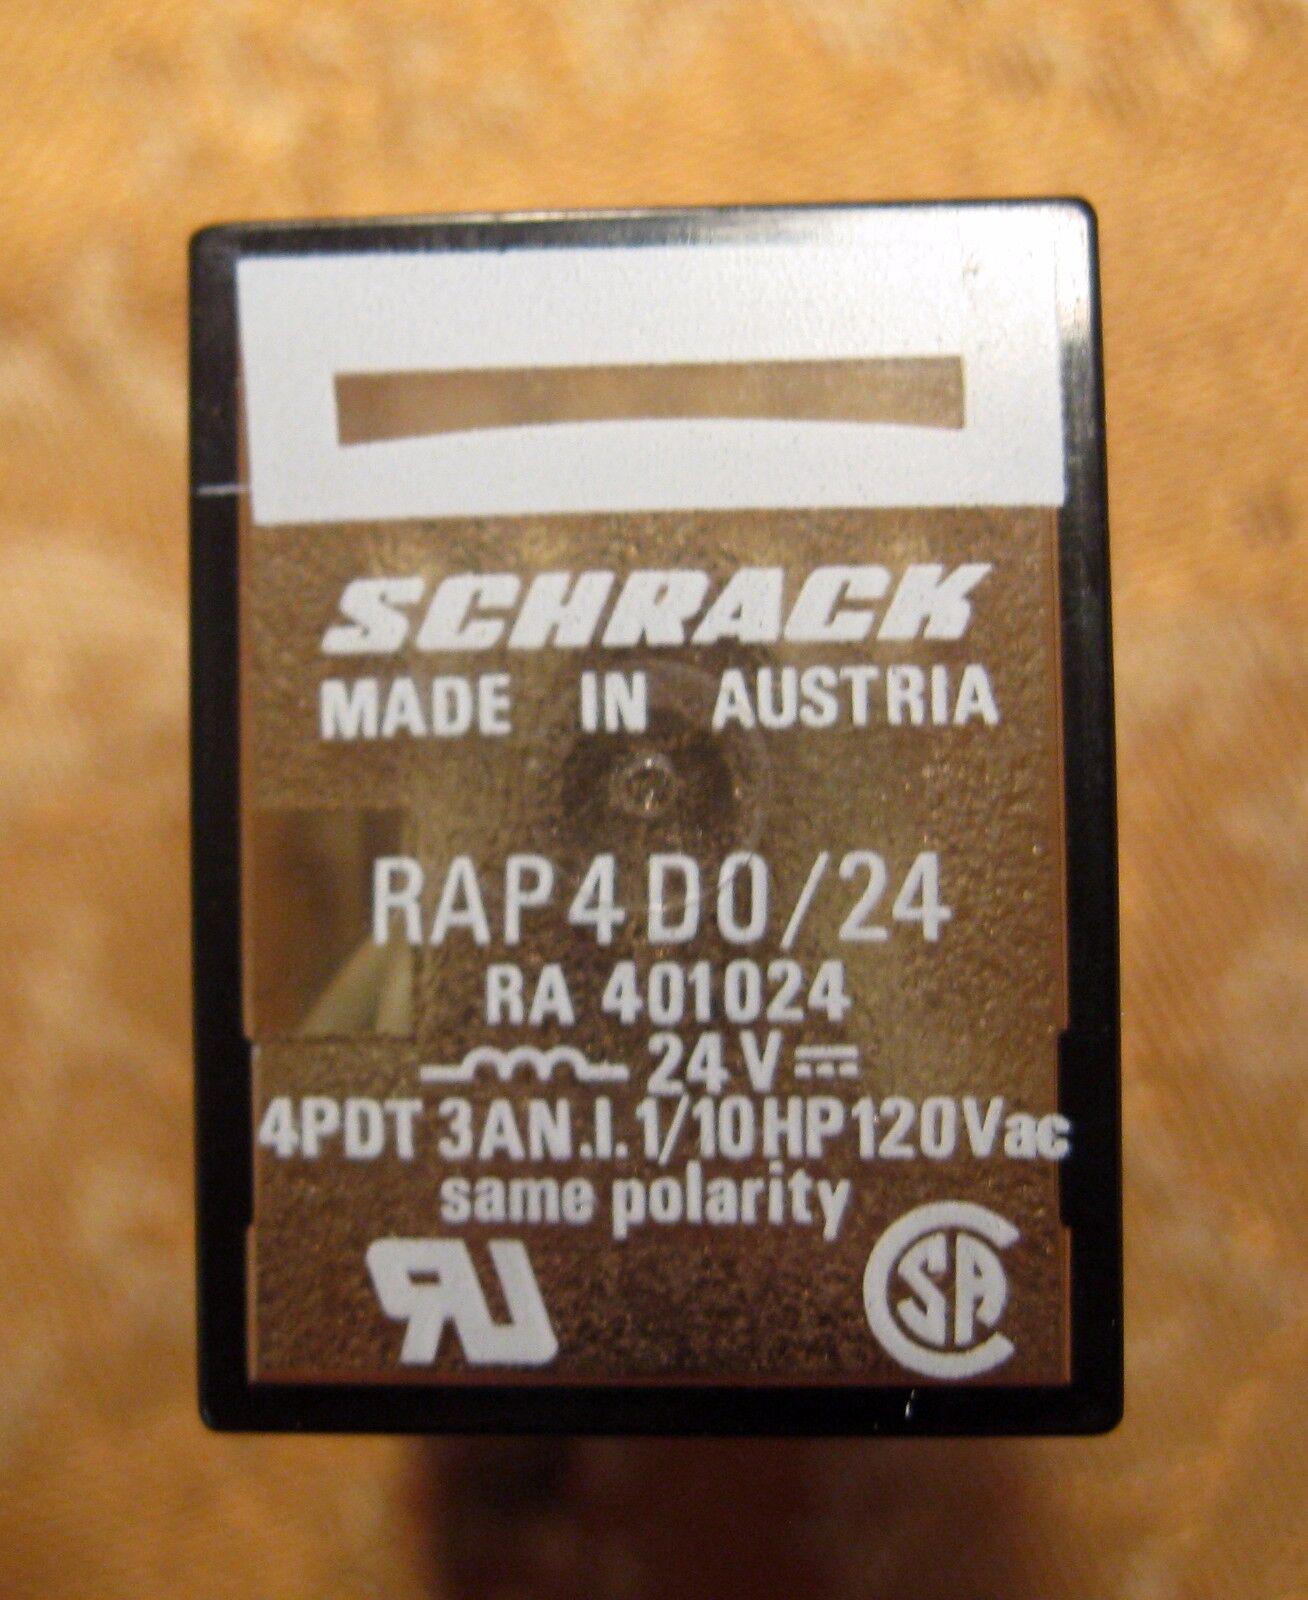 Schrack RAP4D0/24 RA 401024 Relay - 24v 4pot 3AN.1.10 HP 120Vac same polarity 